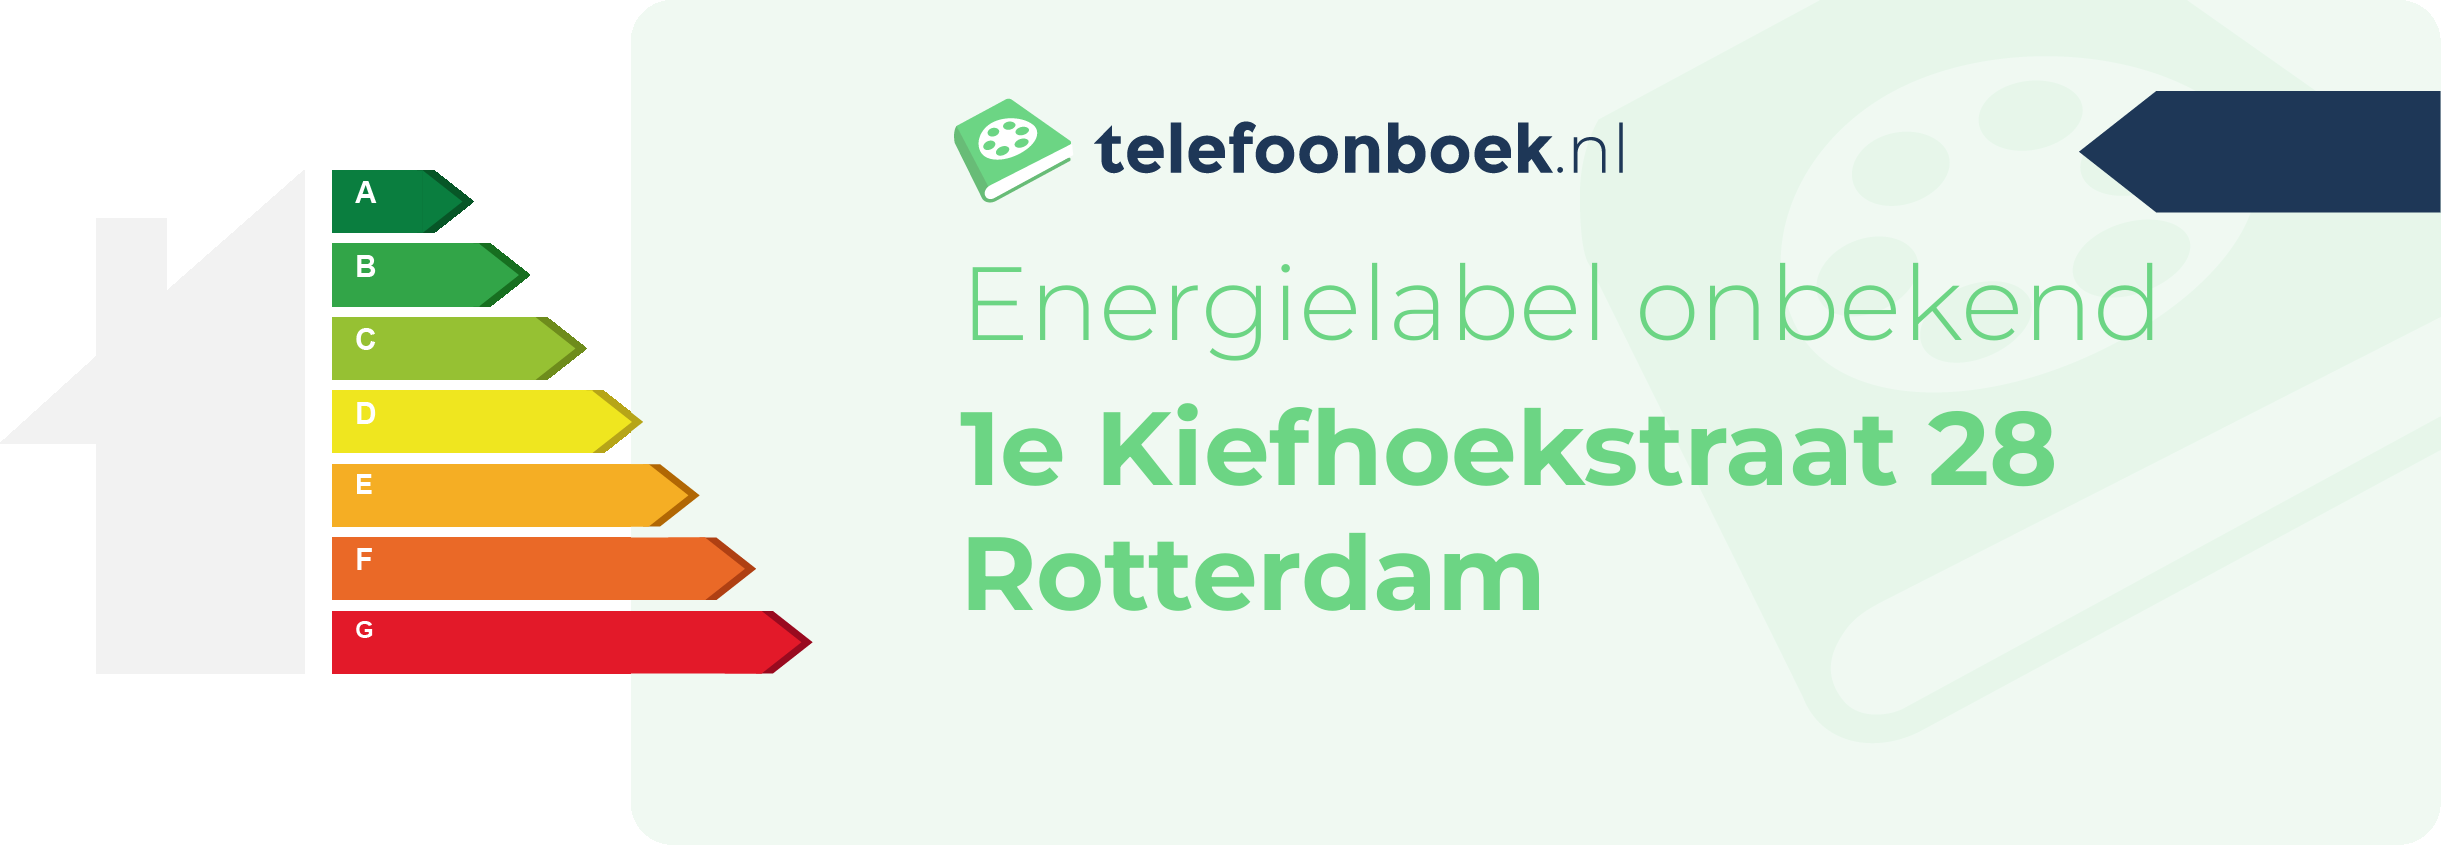 Energielabel 1e Kiefhoekstraat 28 Rotterdam